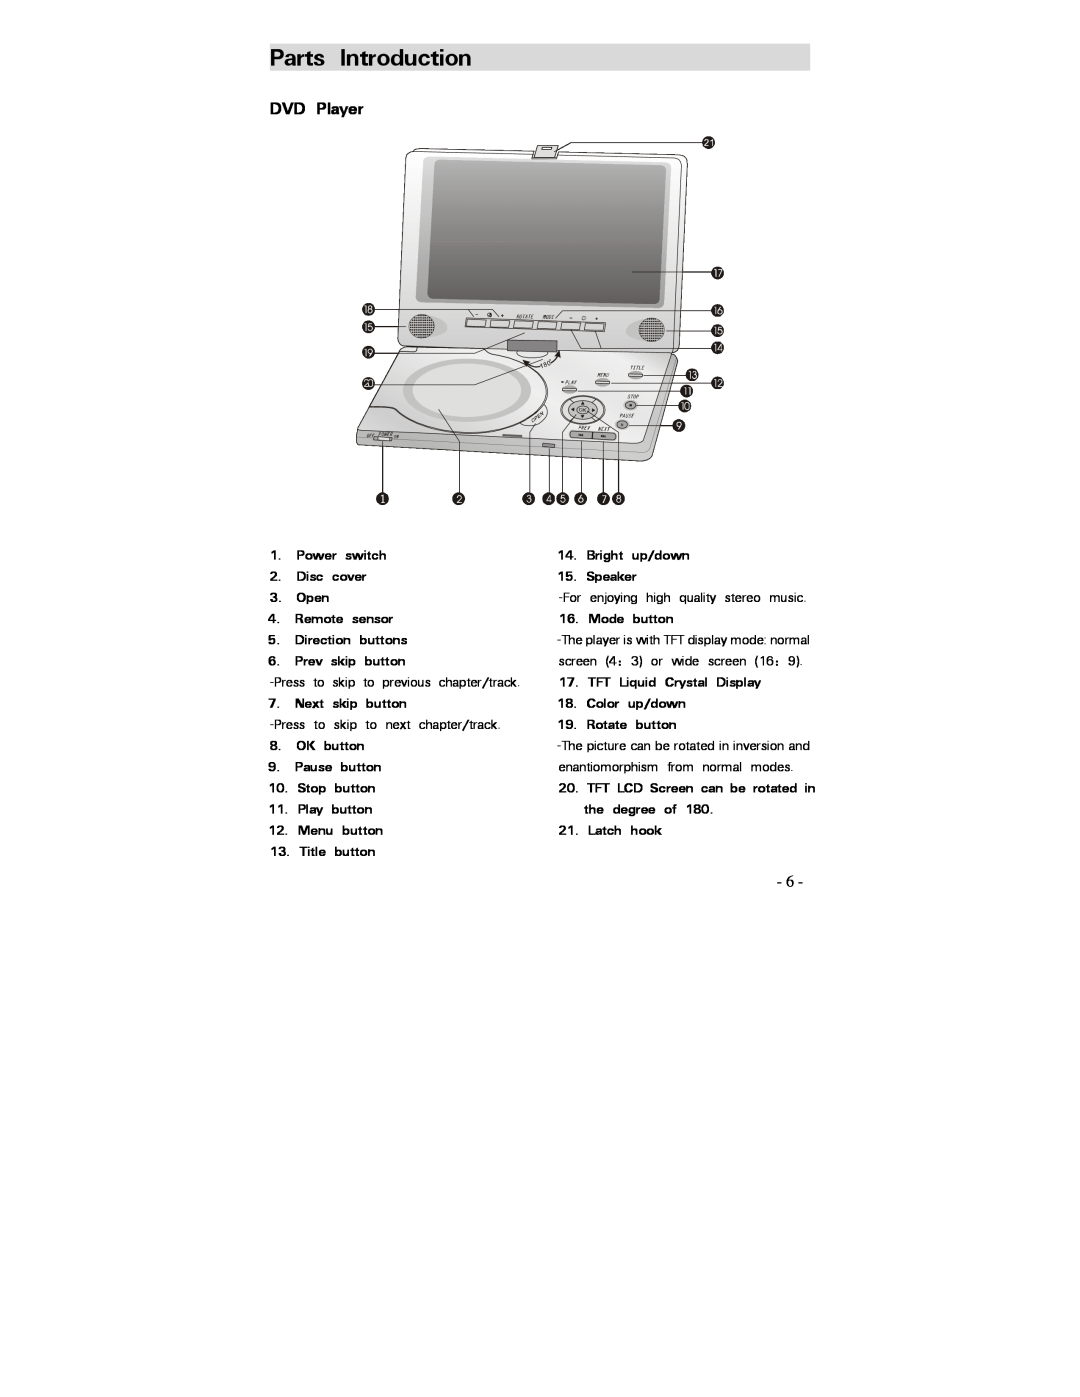 Polaroid PDV-0750 Parts Introduction, DVD Player, Power switch 2. Disc cover 3. Open 4. Remote sensor, Next skip button 